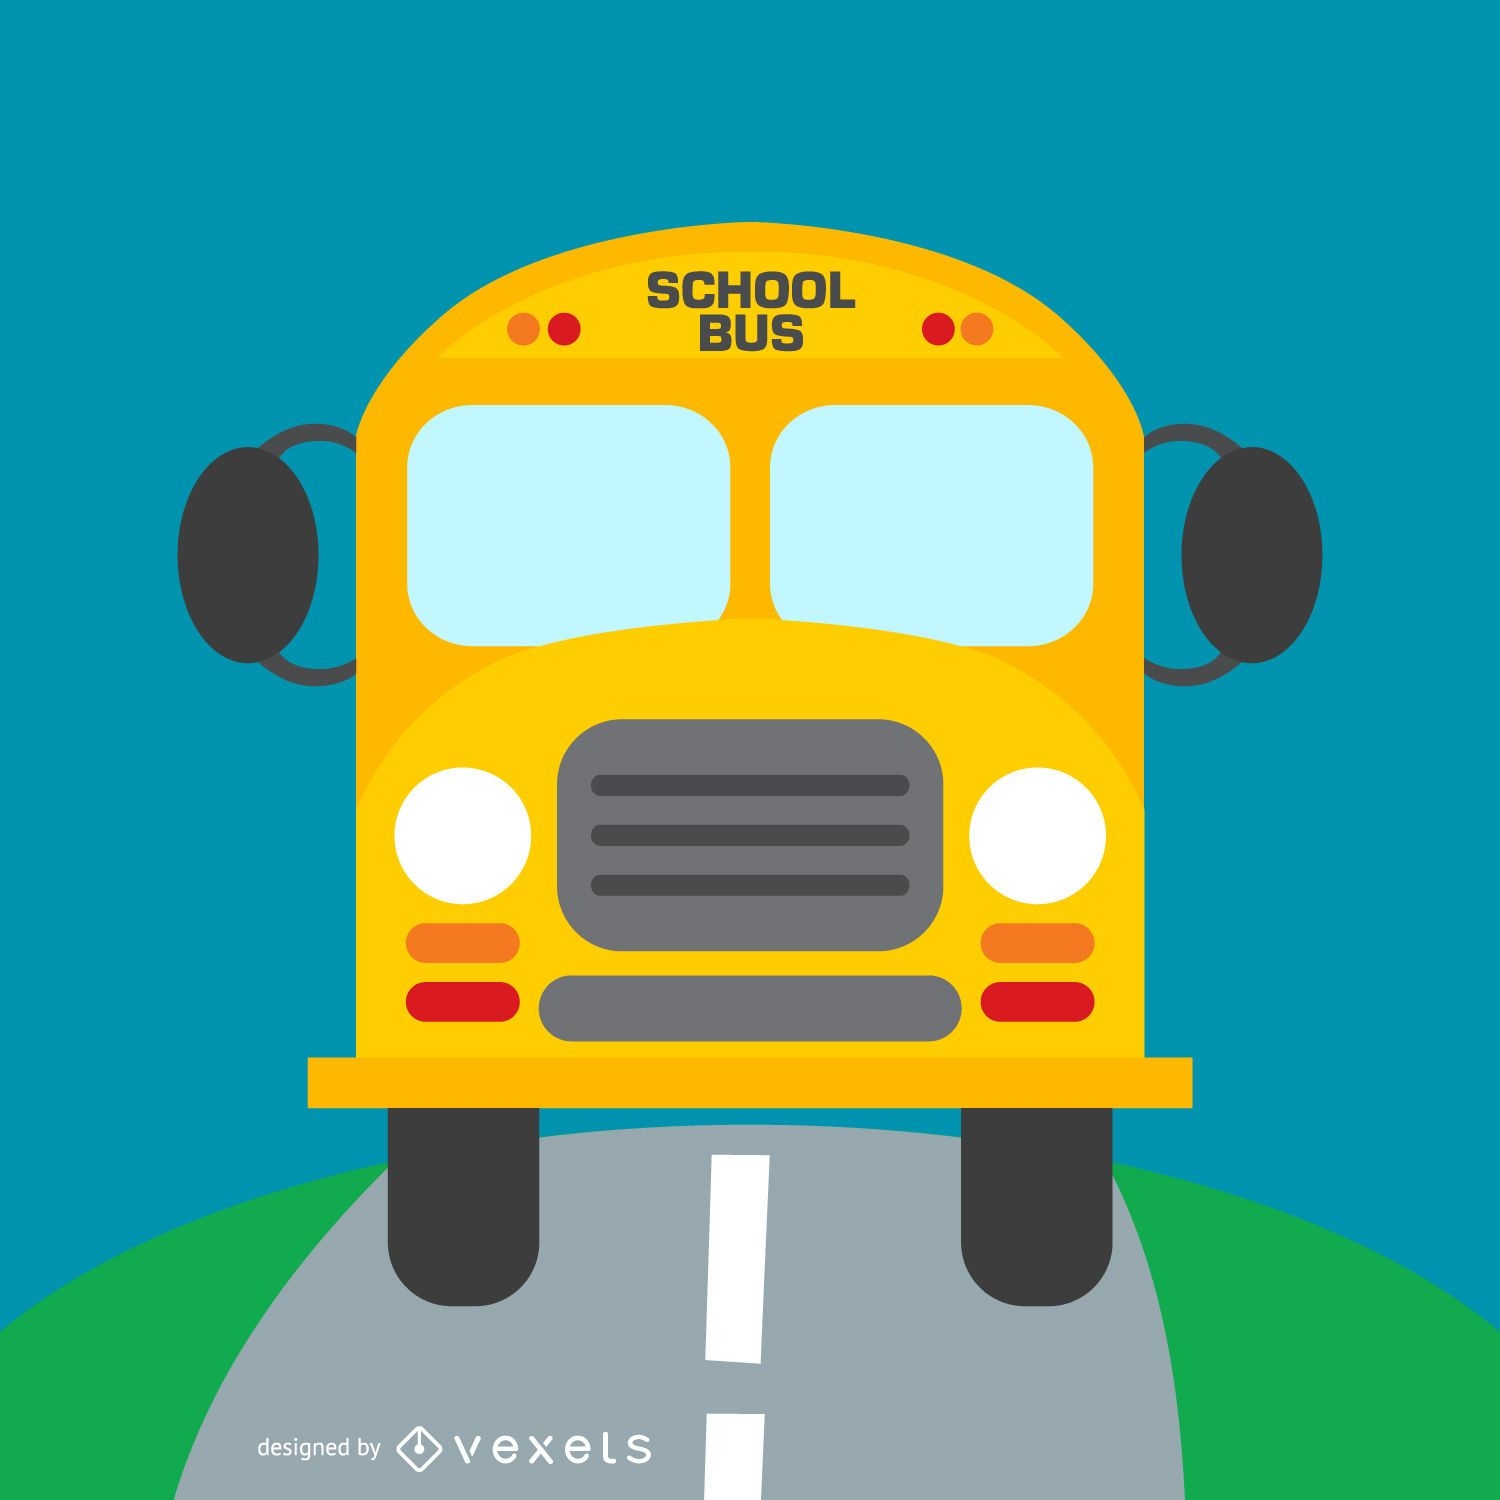 School bus on road illustration